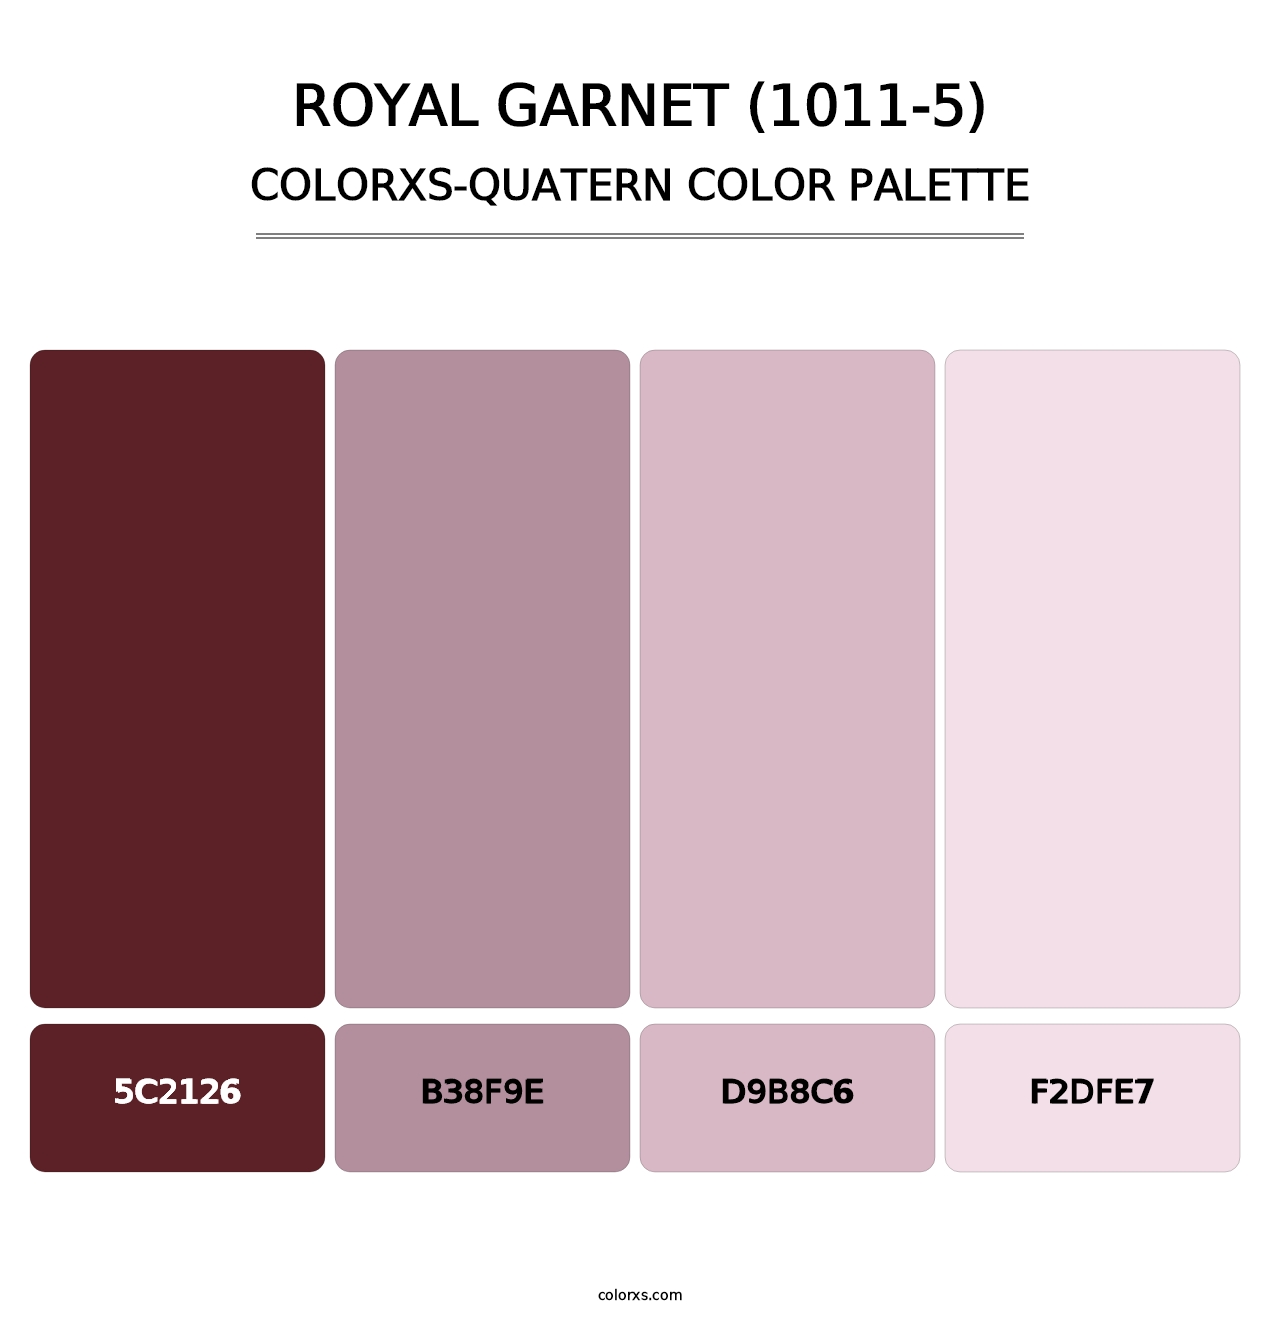 Royal Garnet (1011-5) - Colorxs Quatern Palette